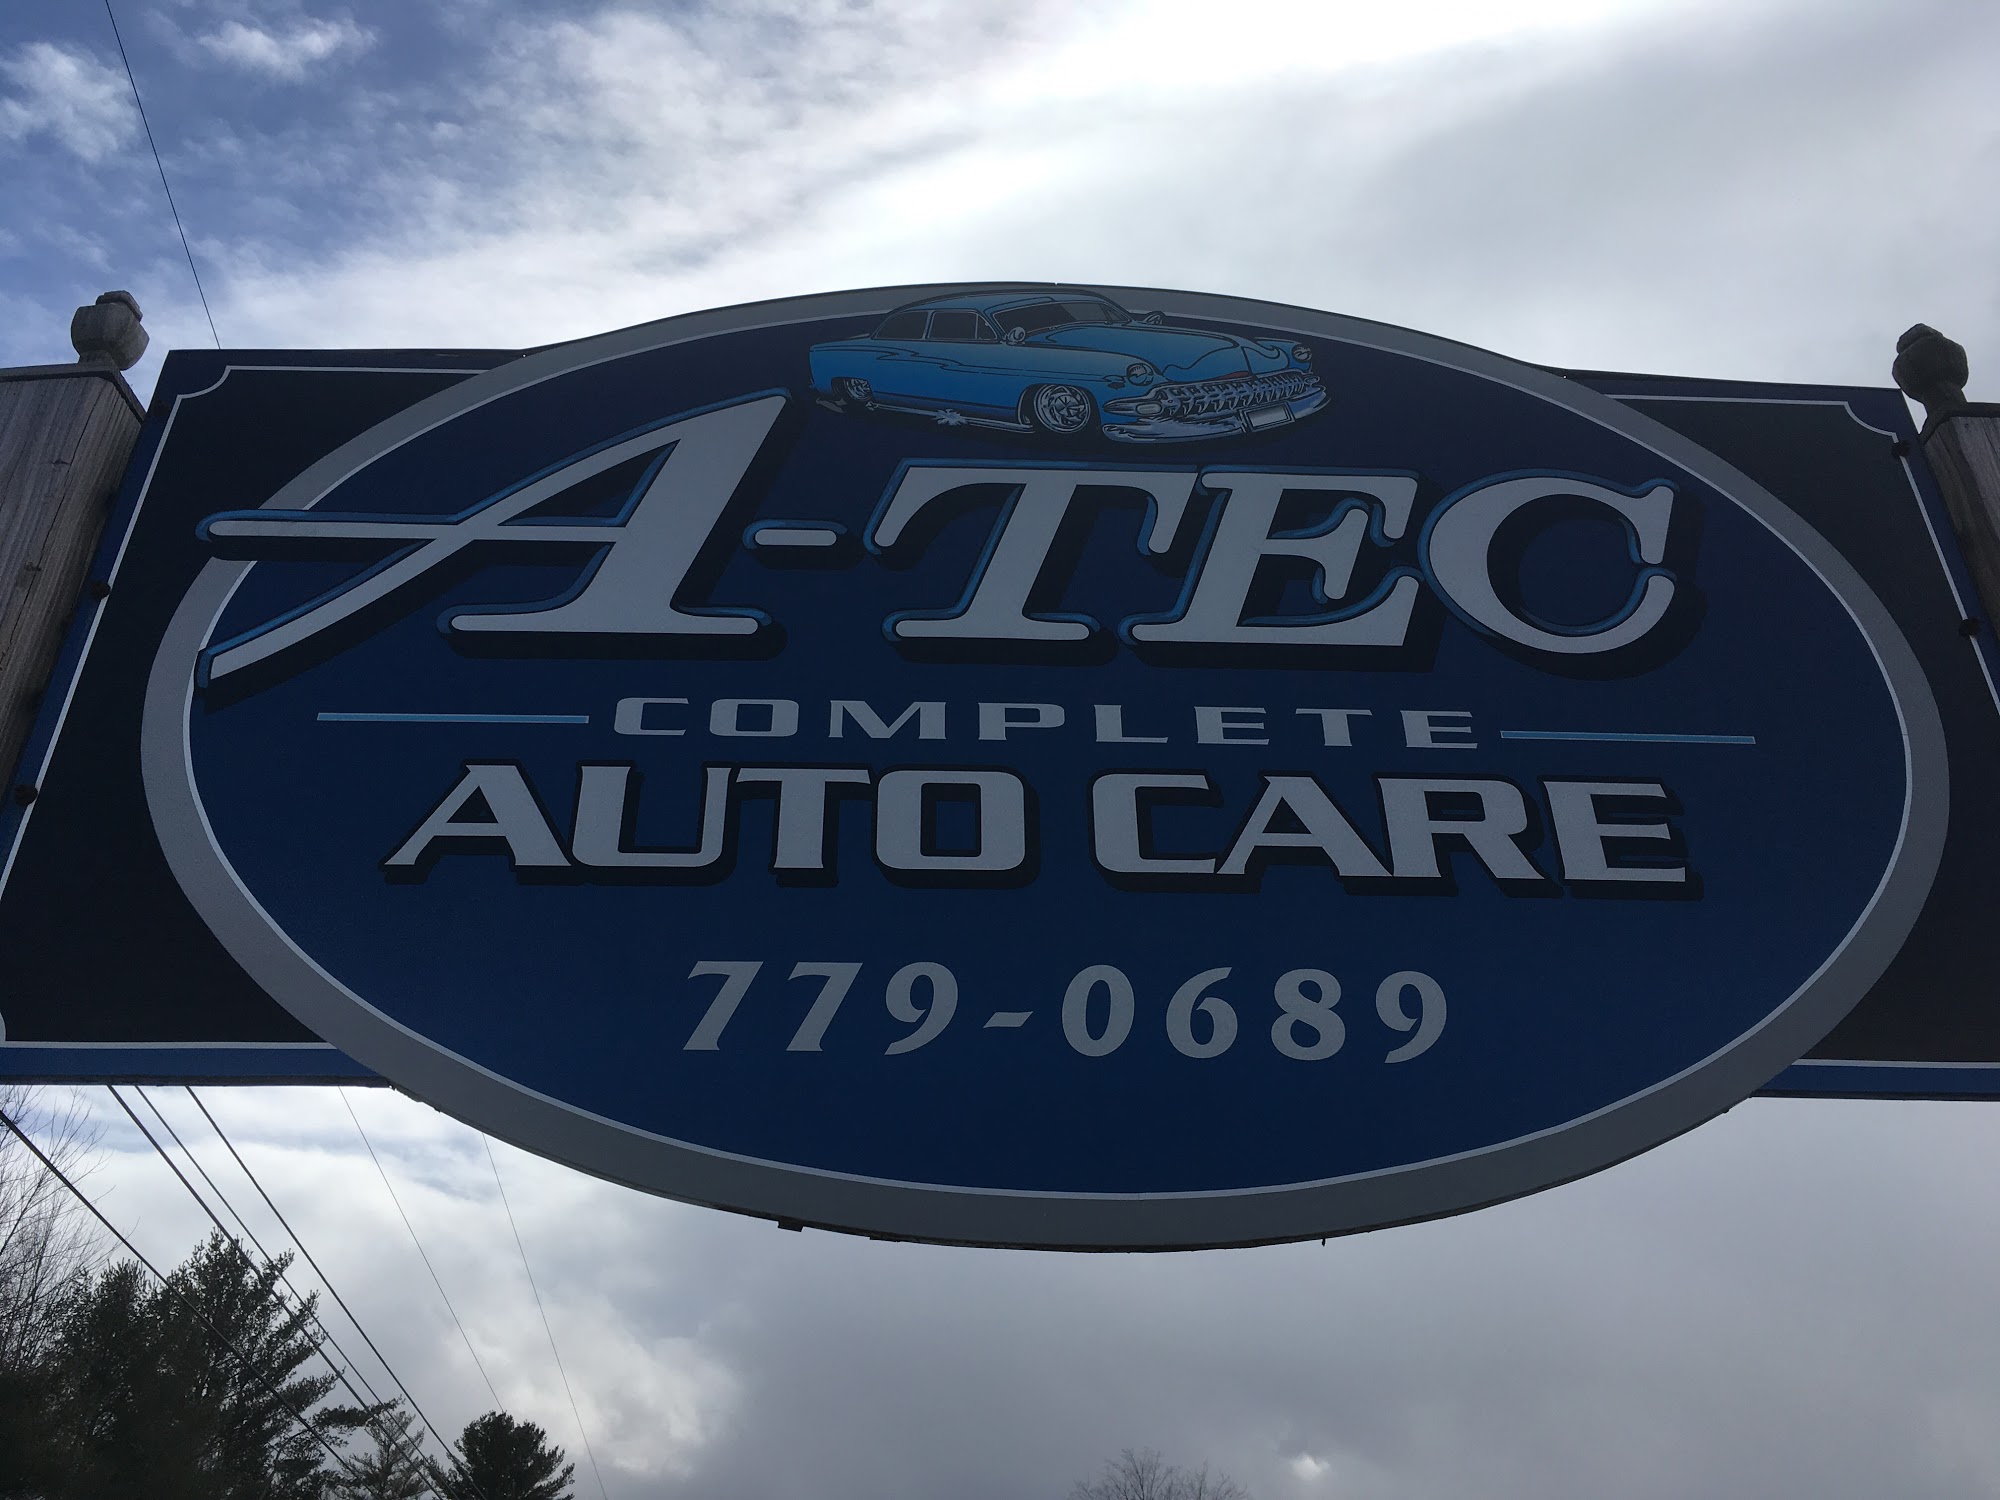 A Tec Auto Sales and Service